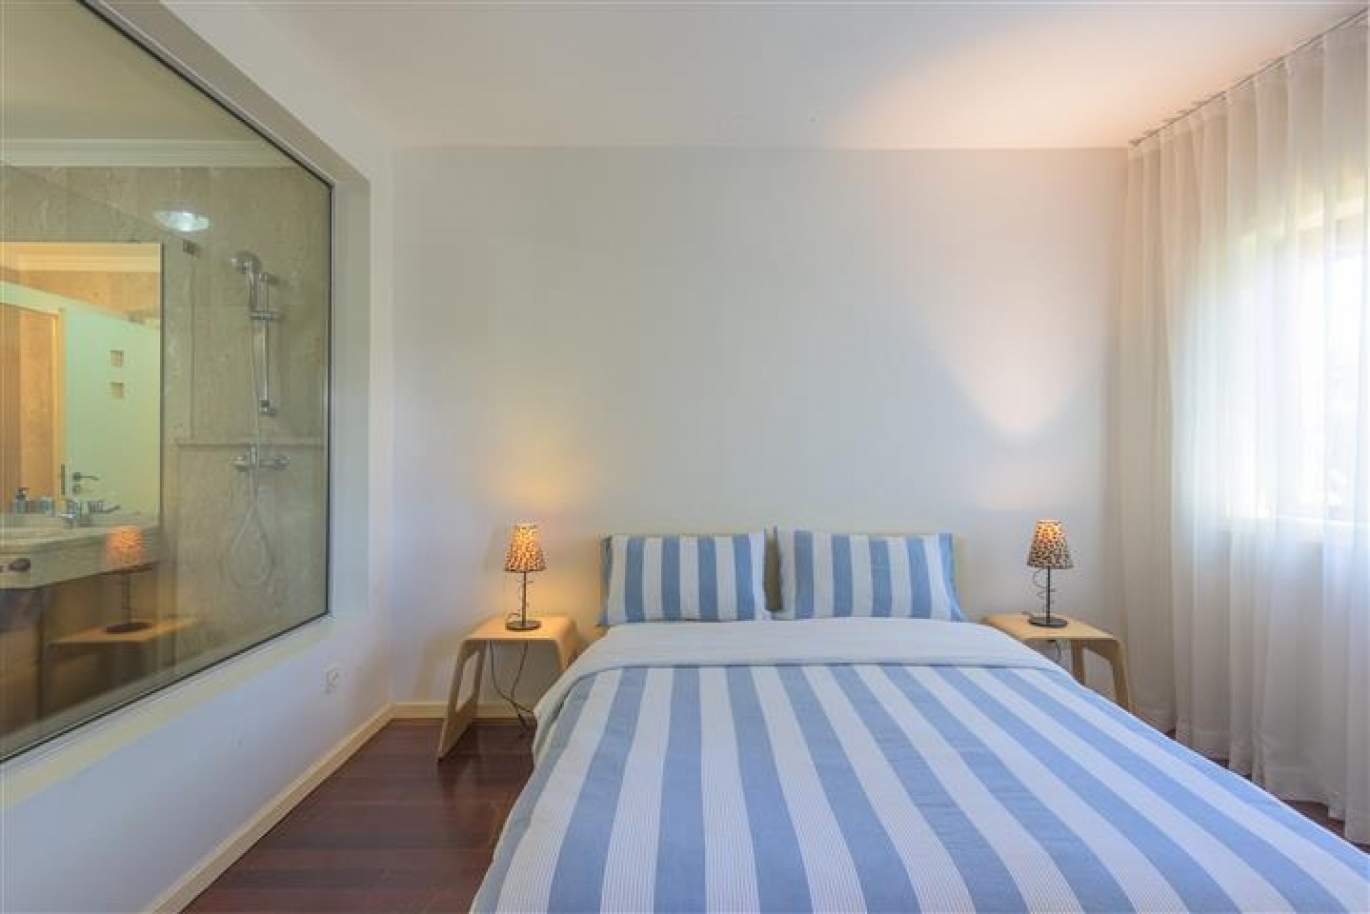 3 bedroom villa with garage, for sale, in Foz Velha, Porto, Portugal_172028